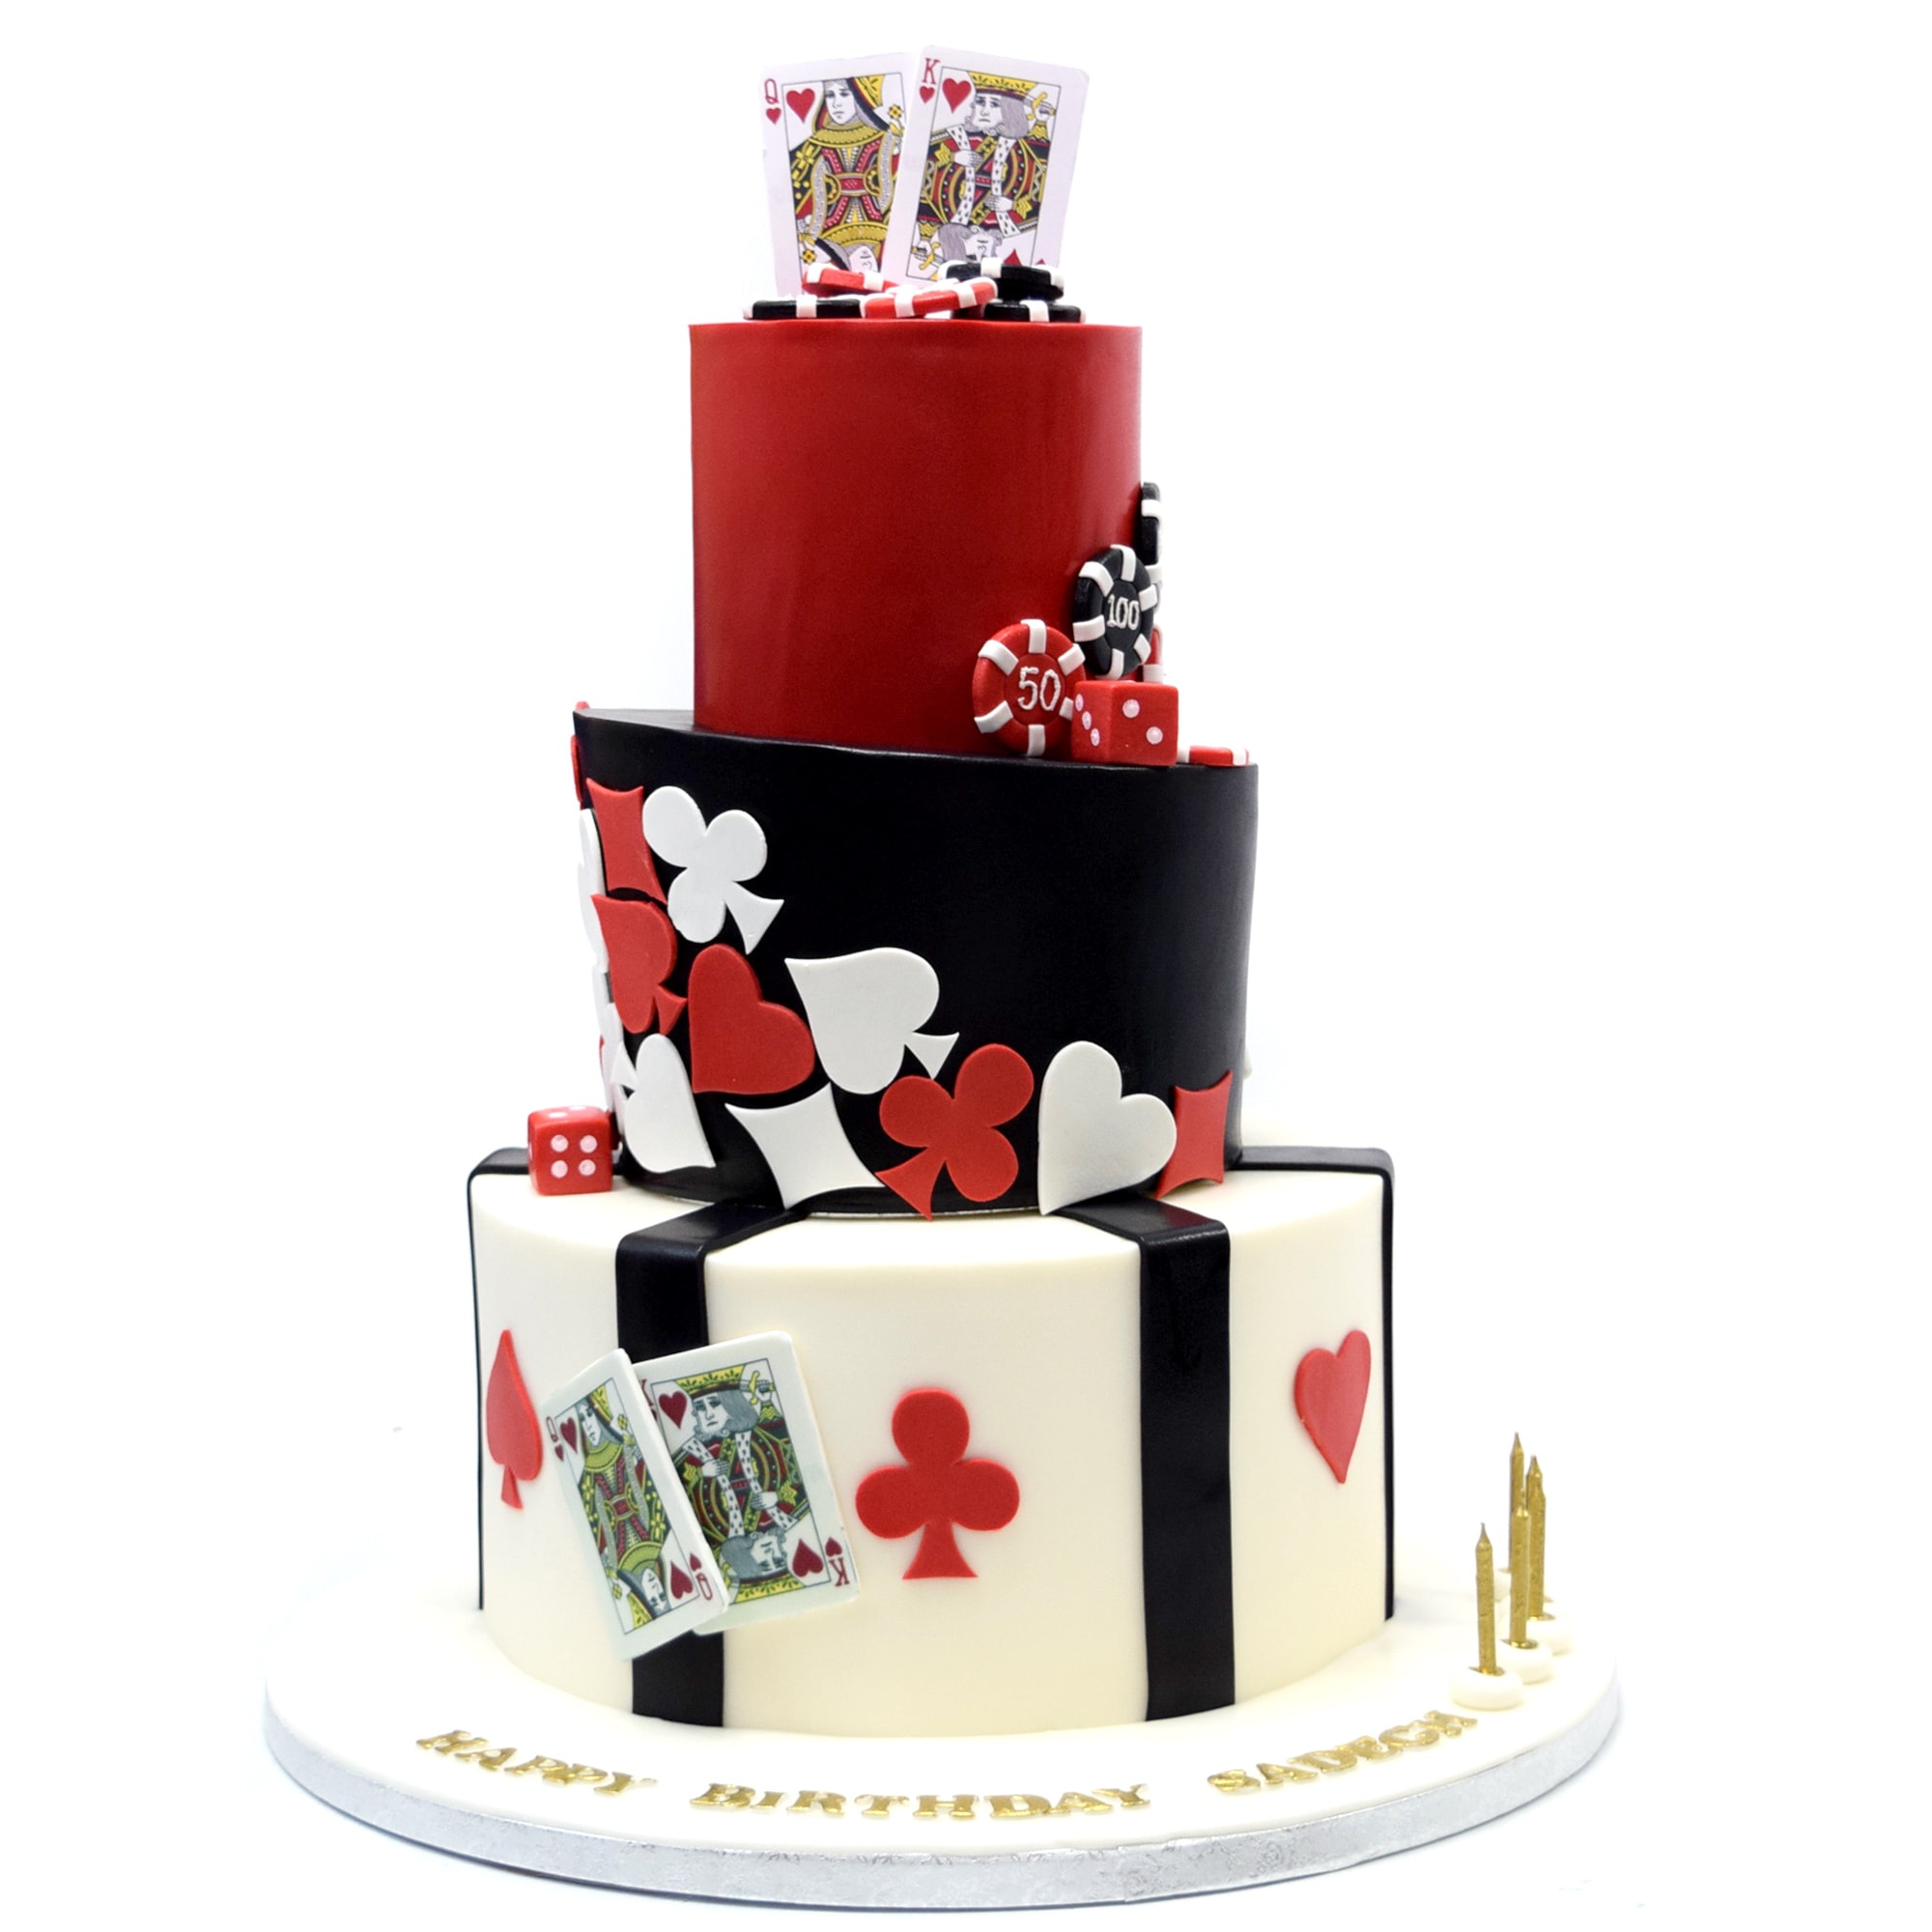 Poker cake      Size 8 inch Vanilla Order  646 9861671 or Dm  cake pokercake cakemasters cakemasters cakedecorating  Instagram